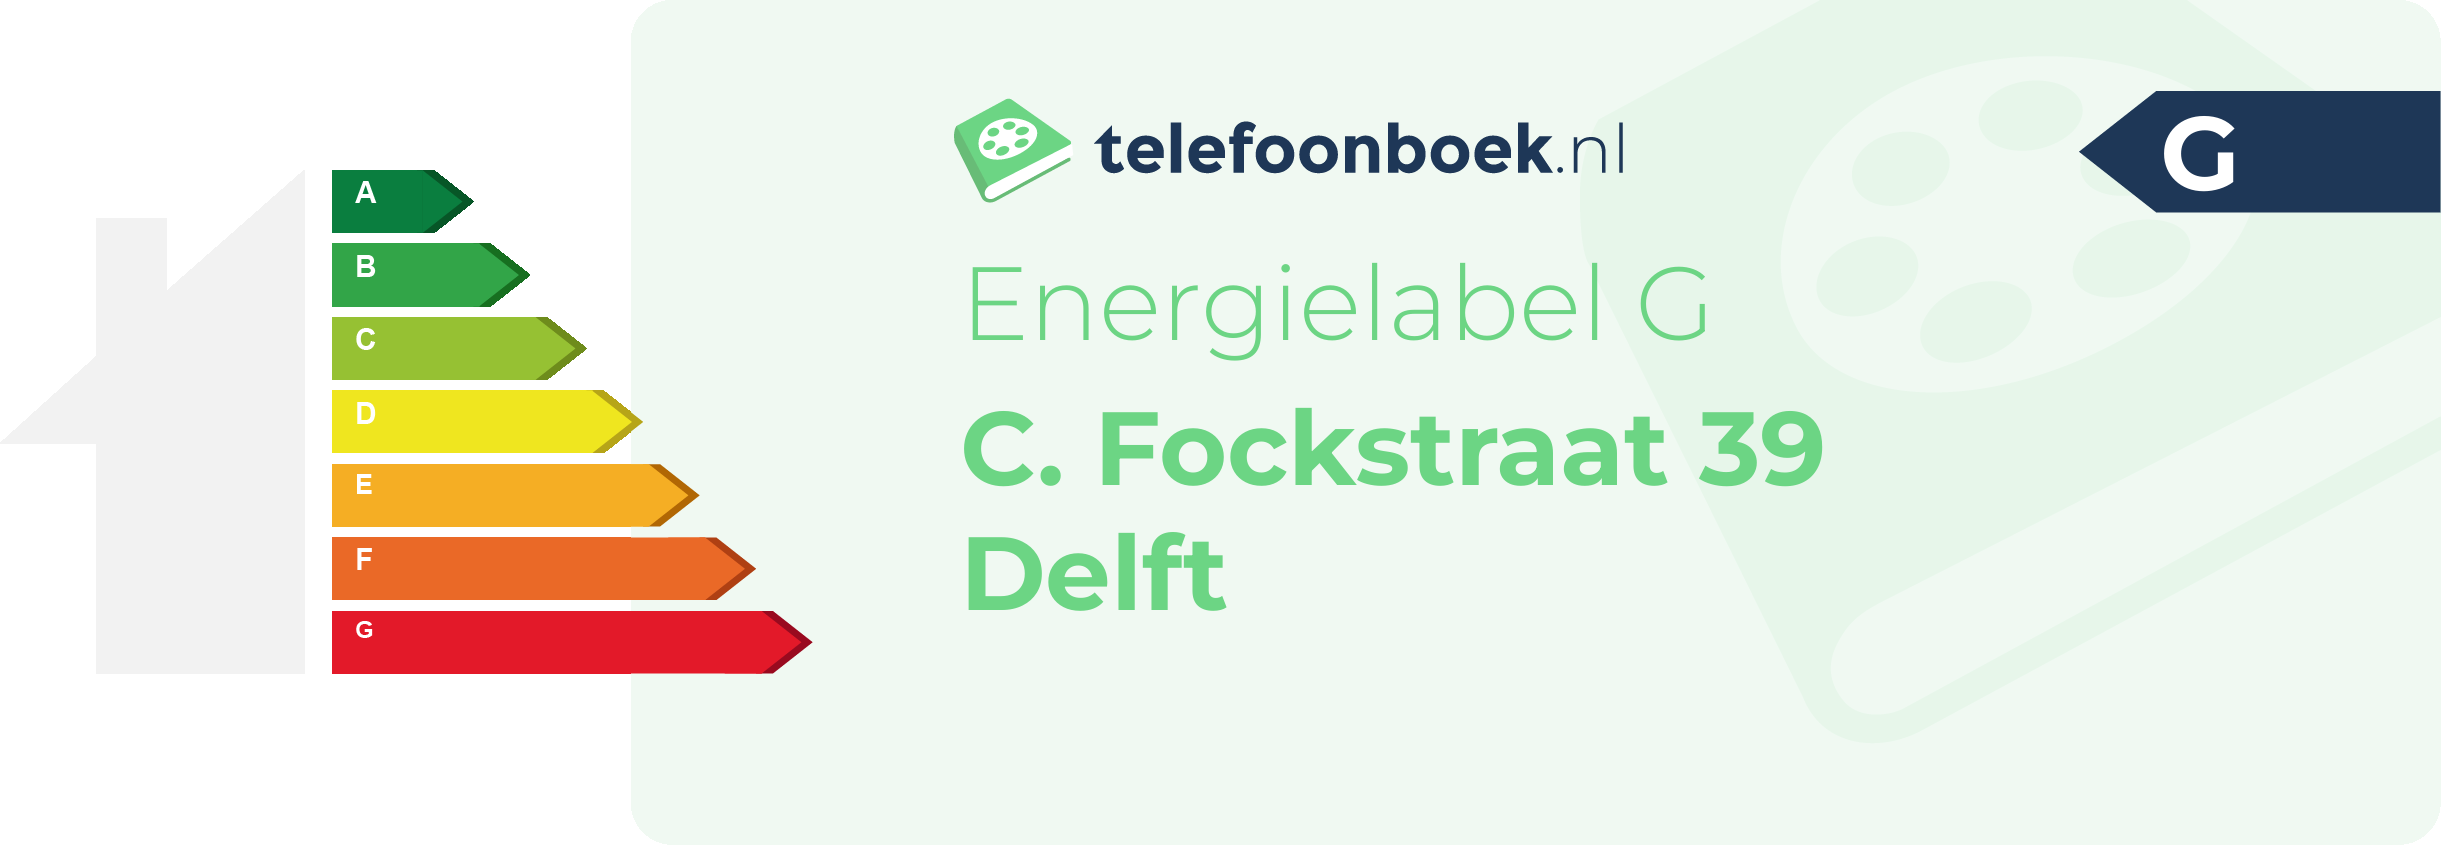 Energielabel C. Fockstraat 39 Delft